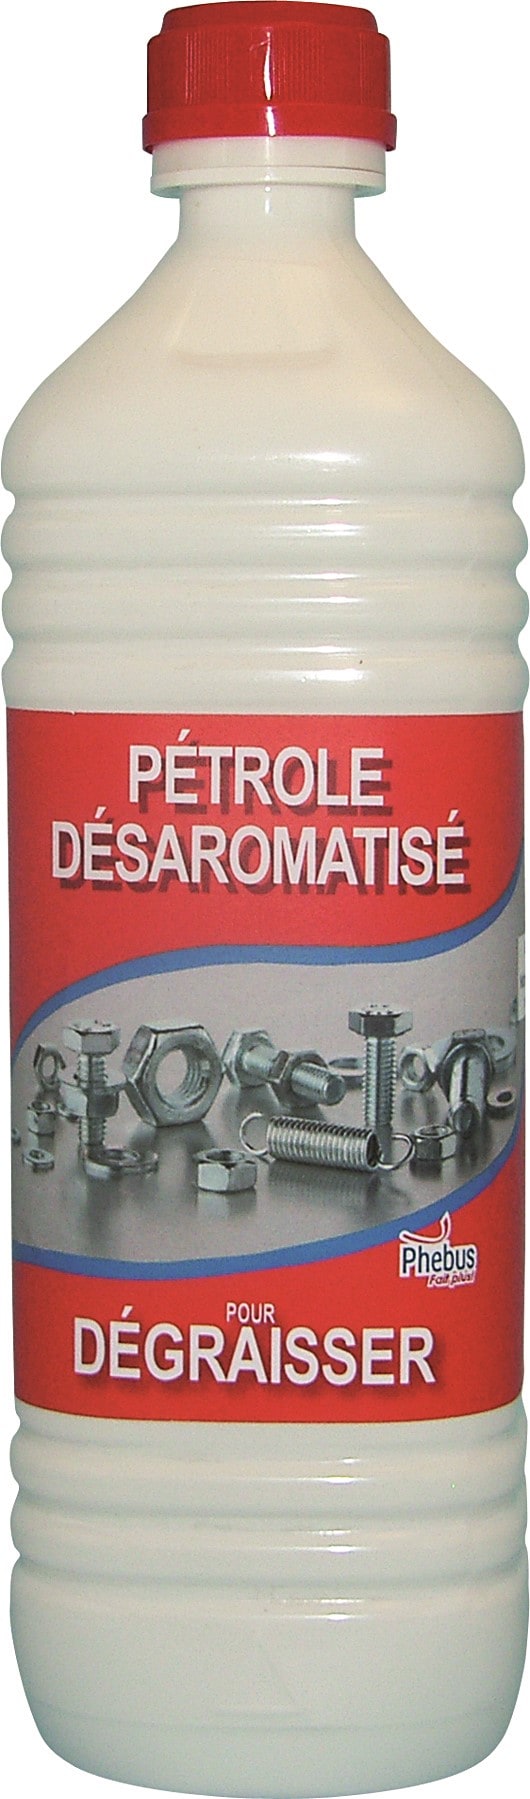 Petrole desaromatise 1l - Mr.Bricolage